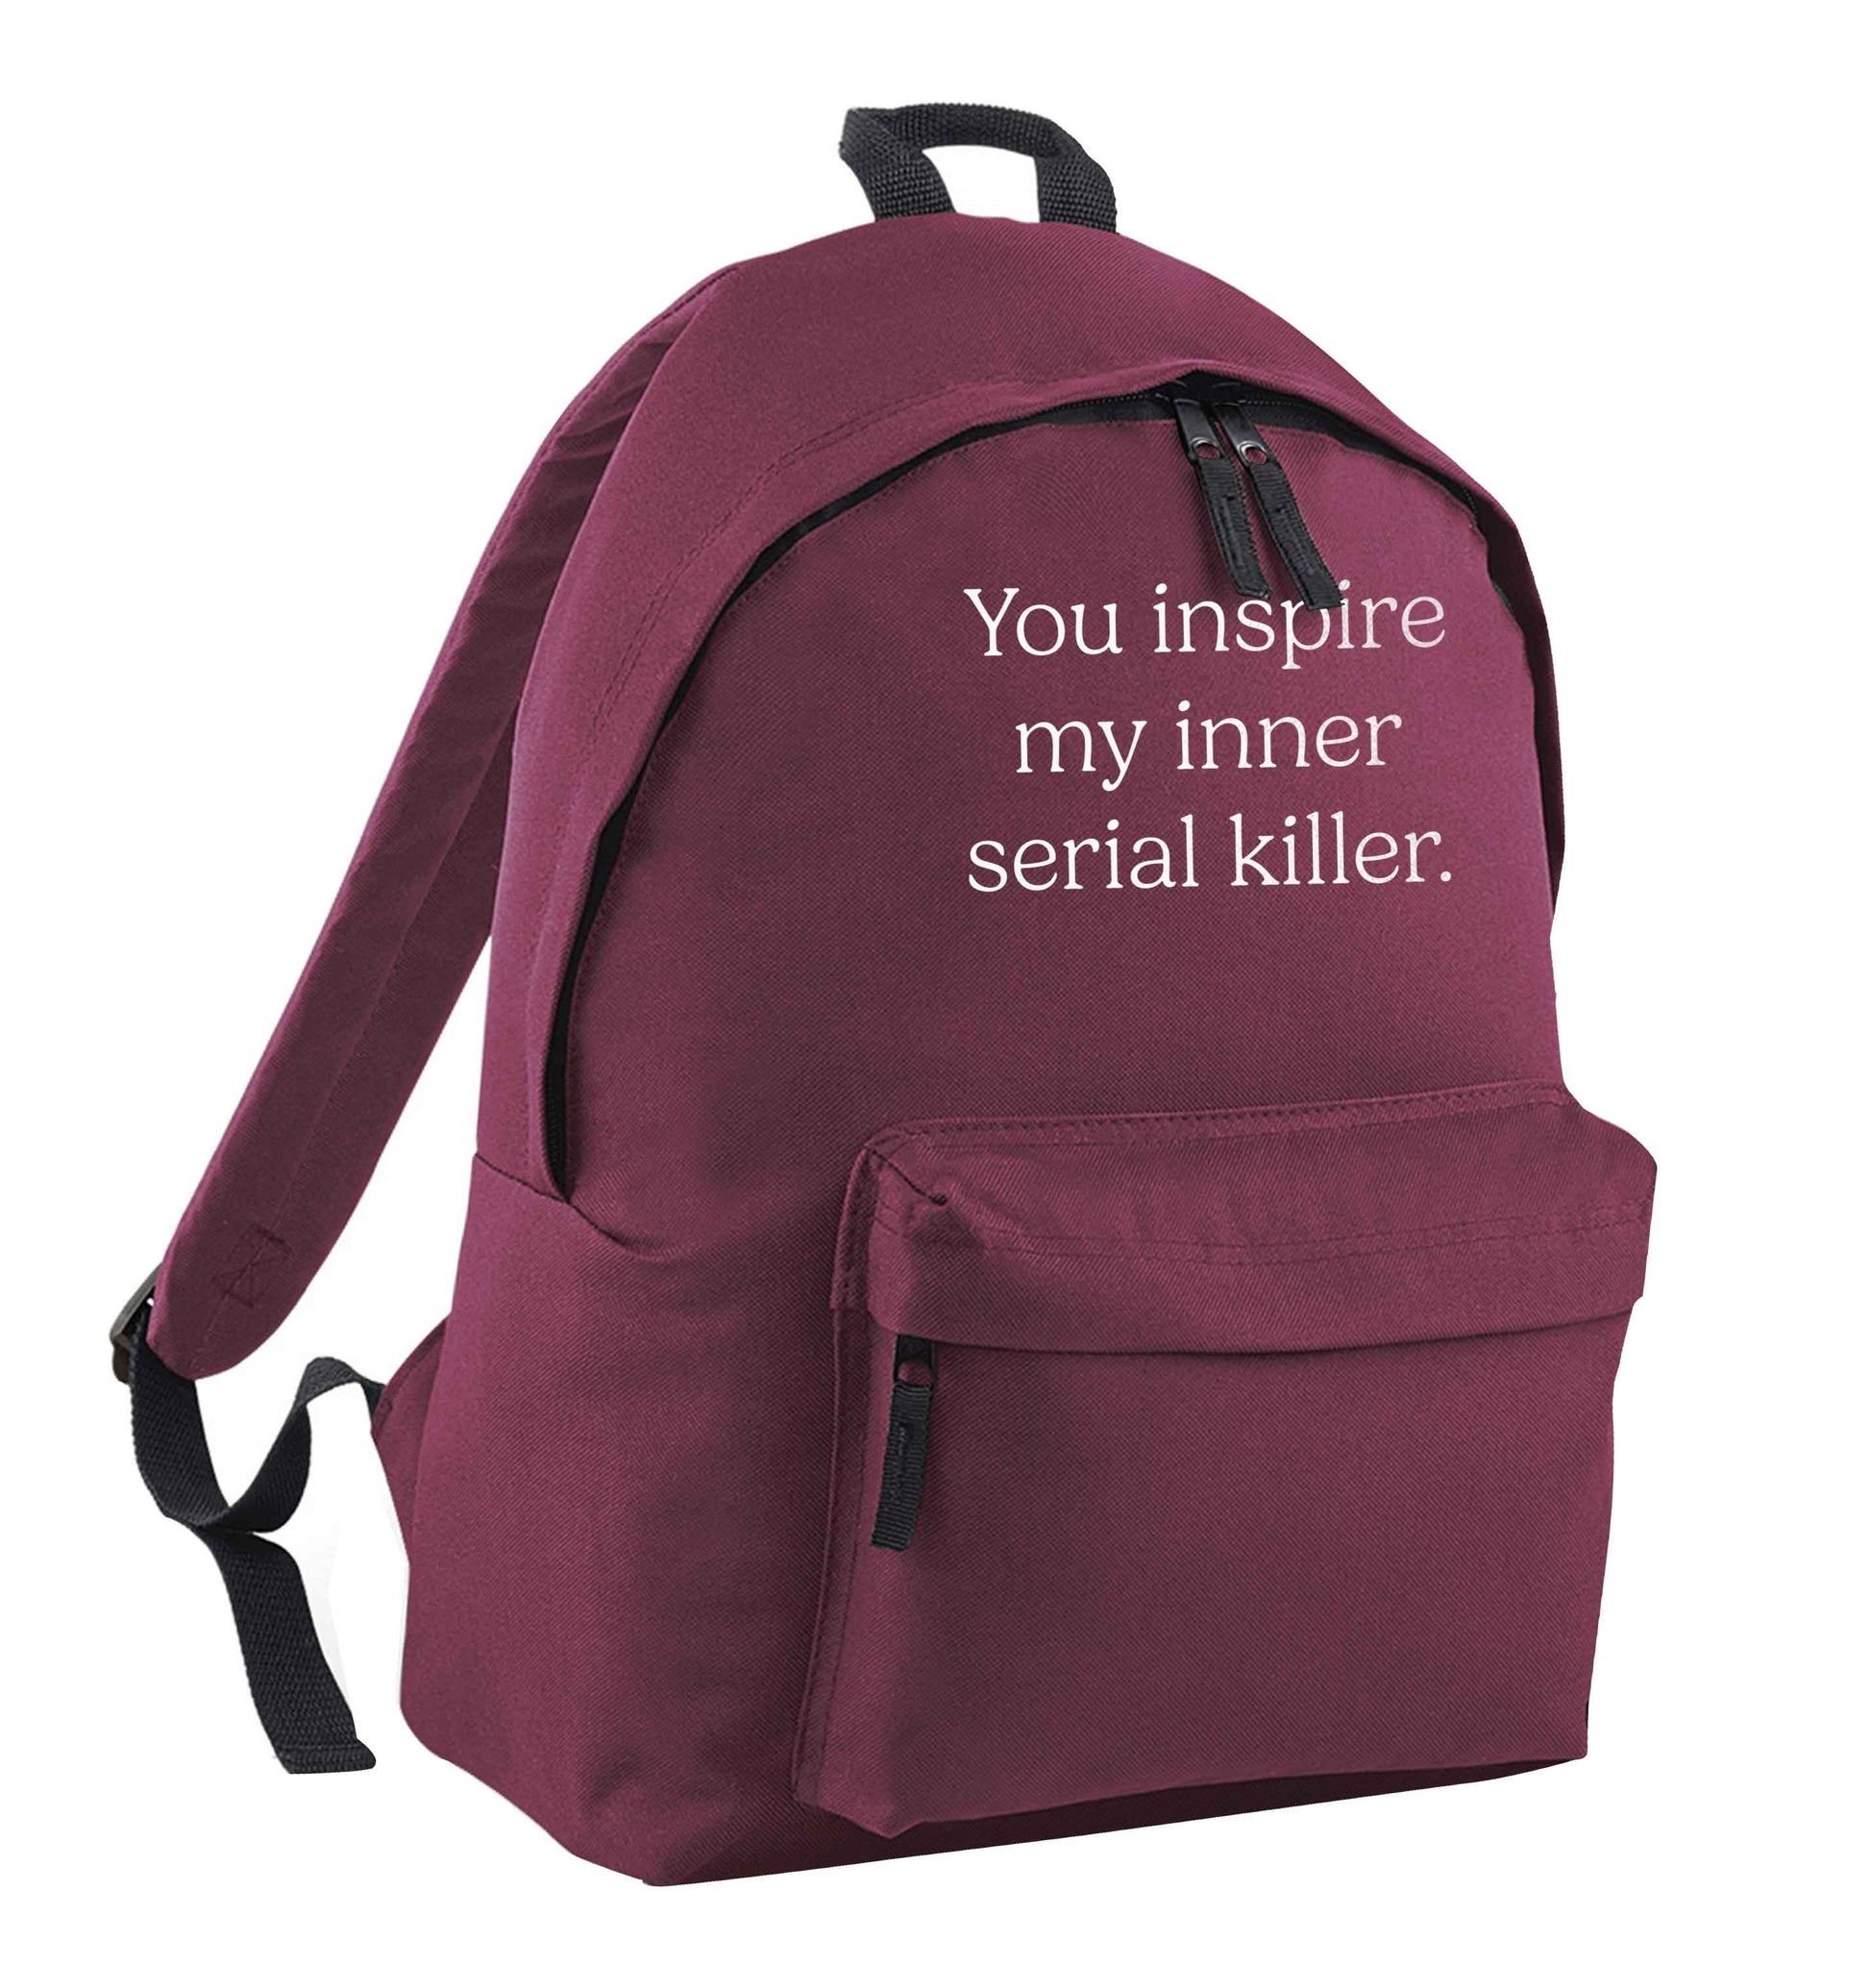 You inspire my inner serial killer Kit maroon adults backpack